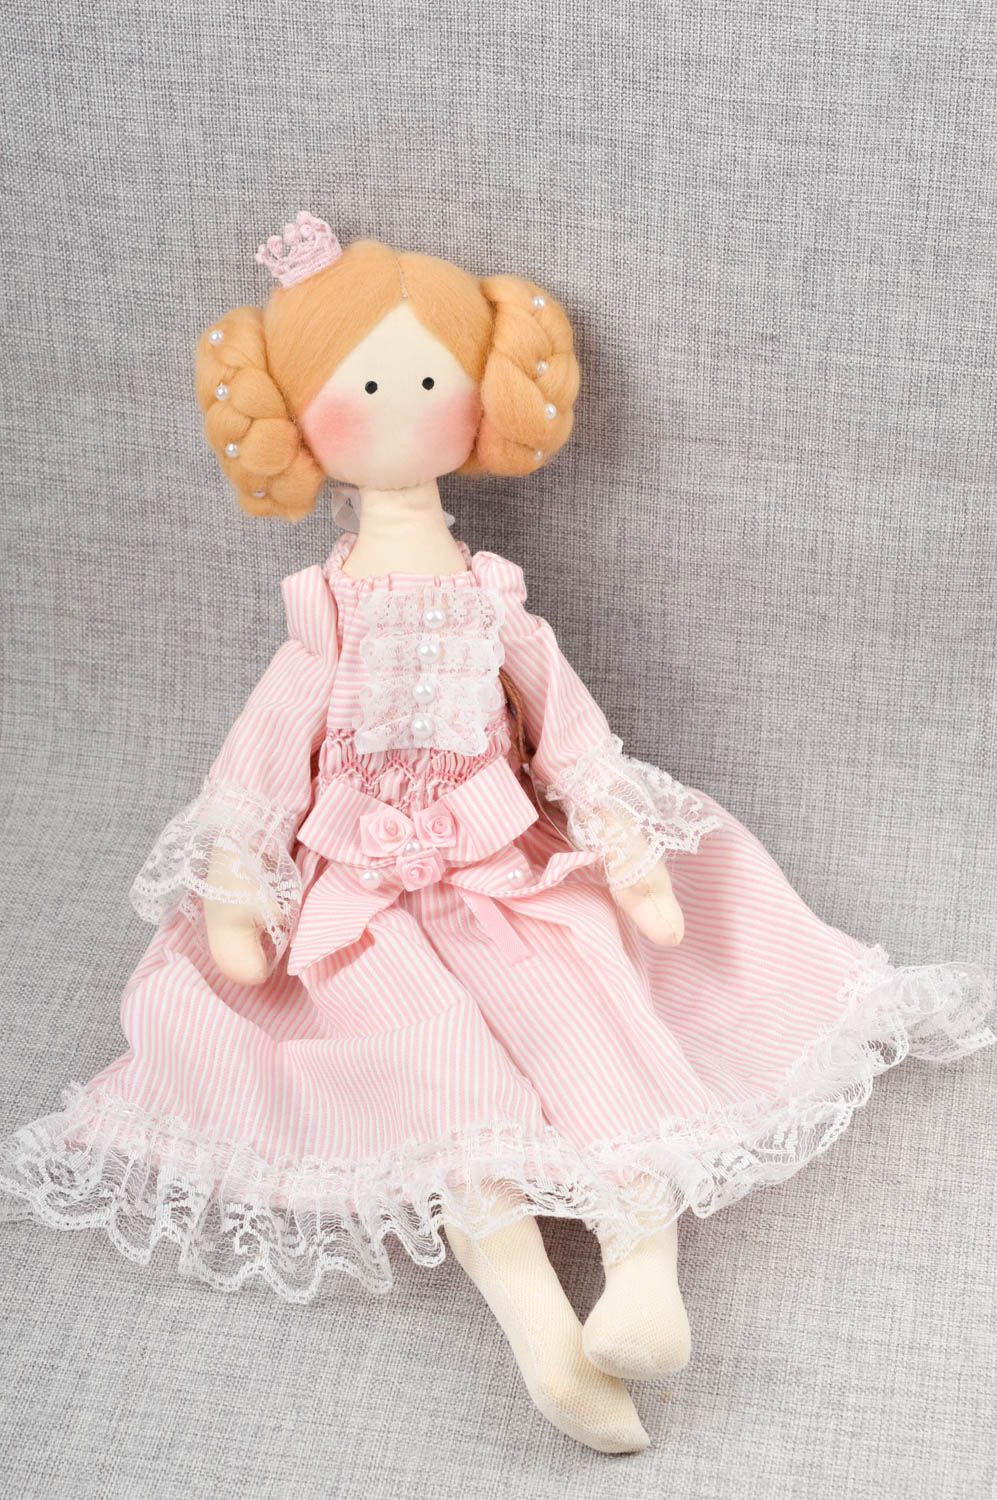 Beautiful handmade rag doll soft interior toy nursery design decorative use only photo 1